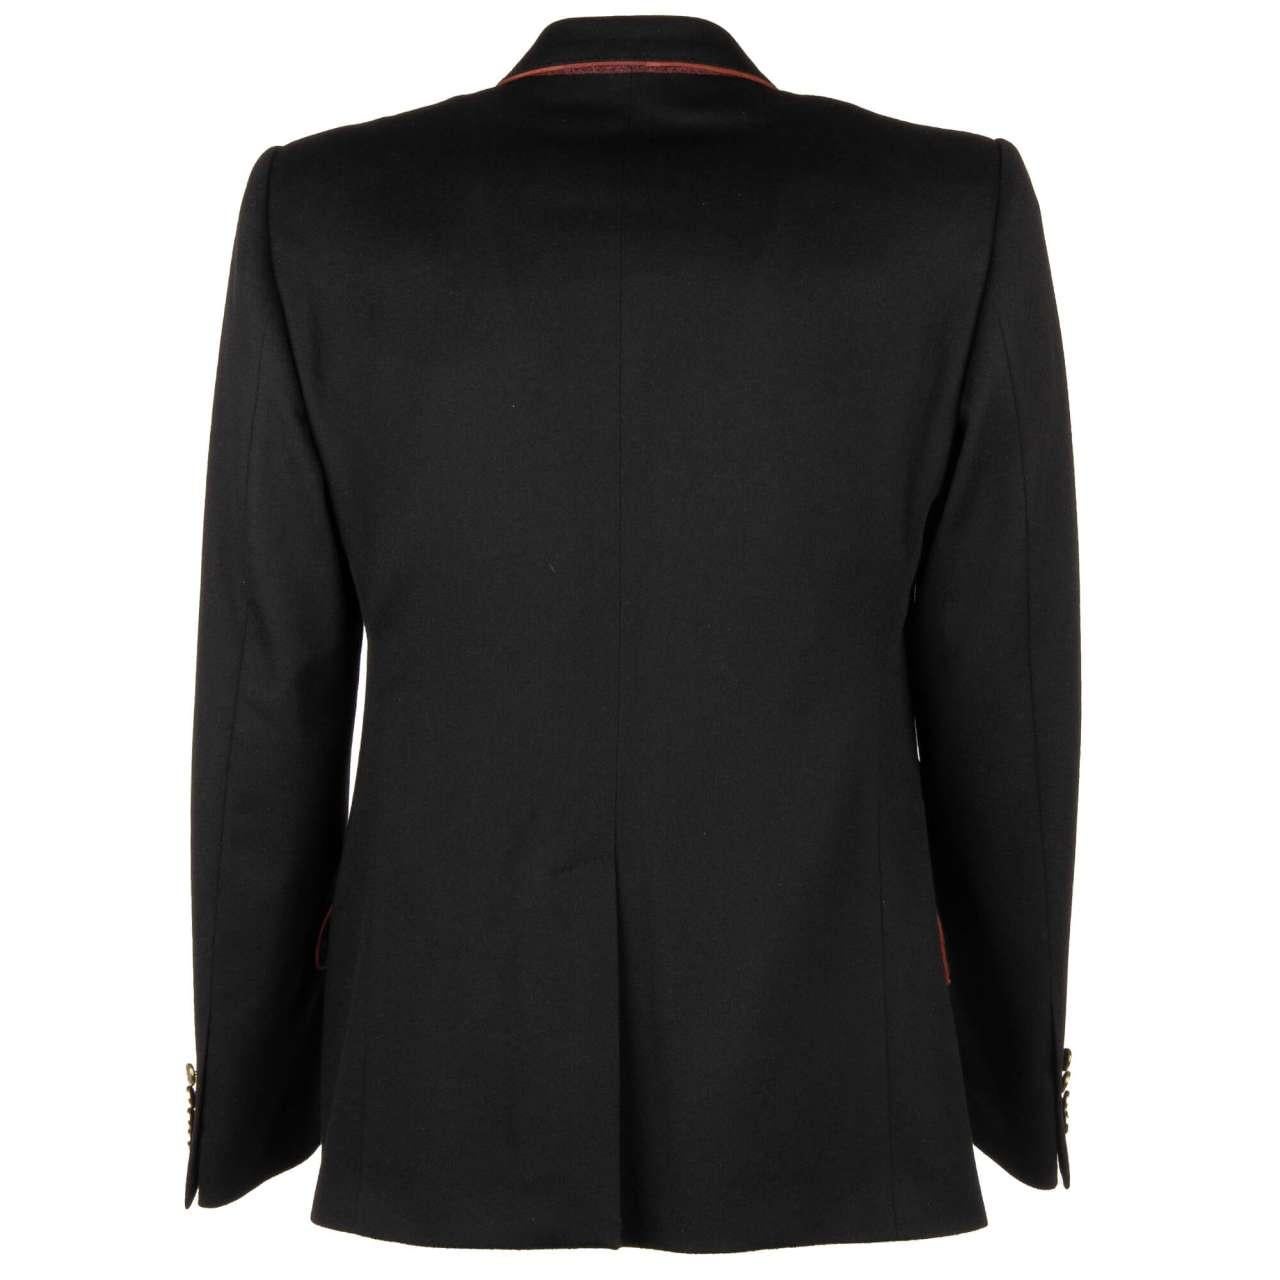 D&G Cashmere Jacket Vest Ensemble SICILIA with Embroidered Logo Crown Black 48 In Excellent Condition For Sale In Erkrath, DE